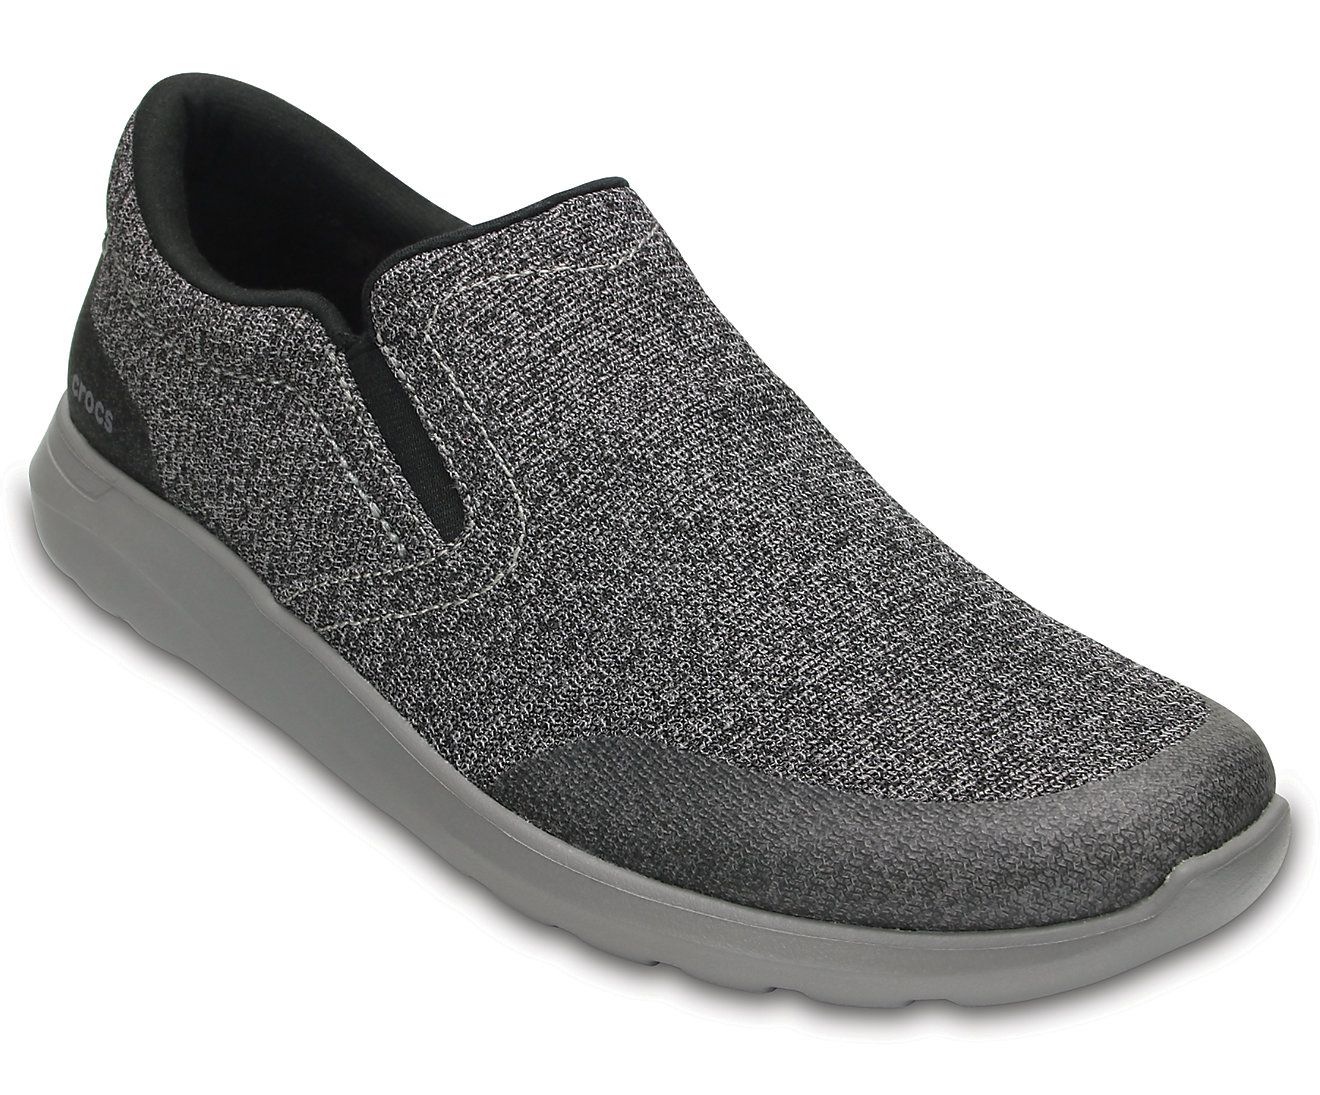 Crocs Crocs Kinsale Static Slip-on Lifestyle Black Casual Shoes - Buy ...